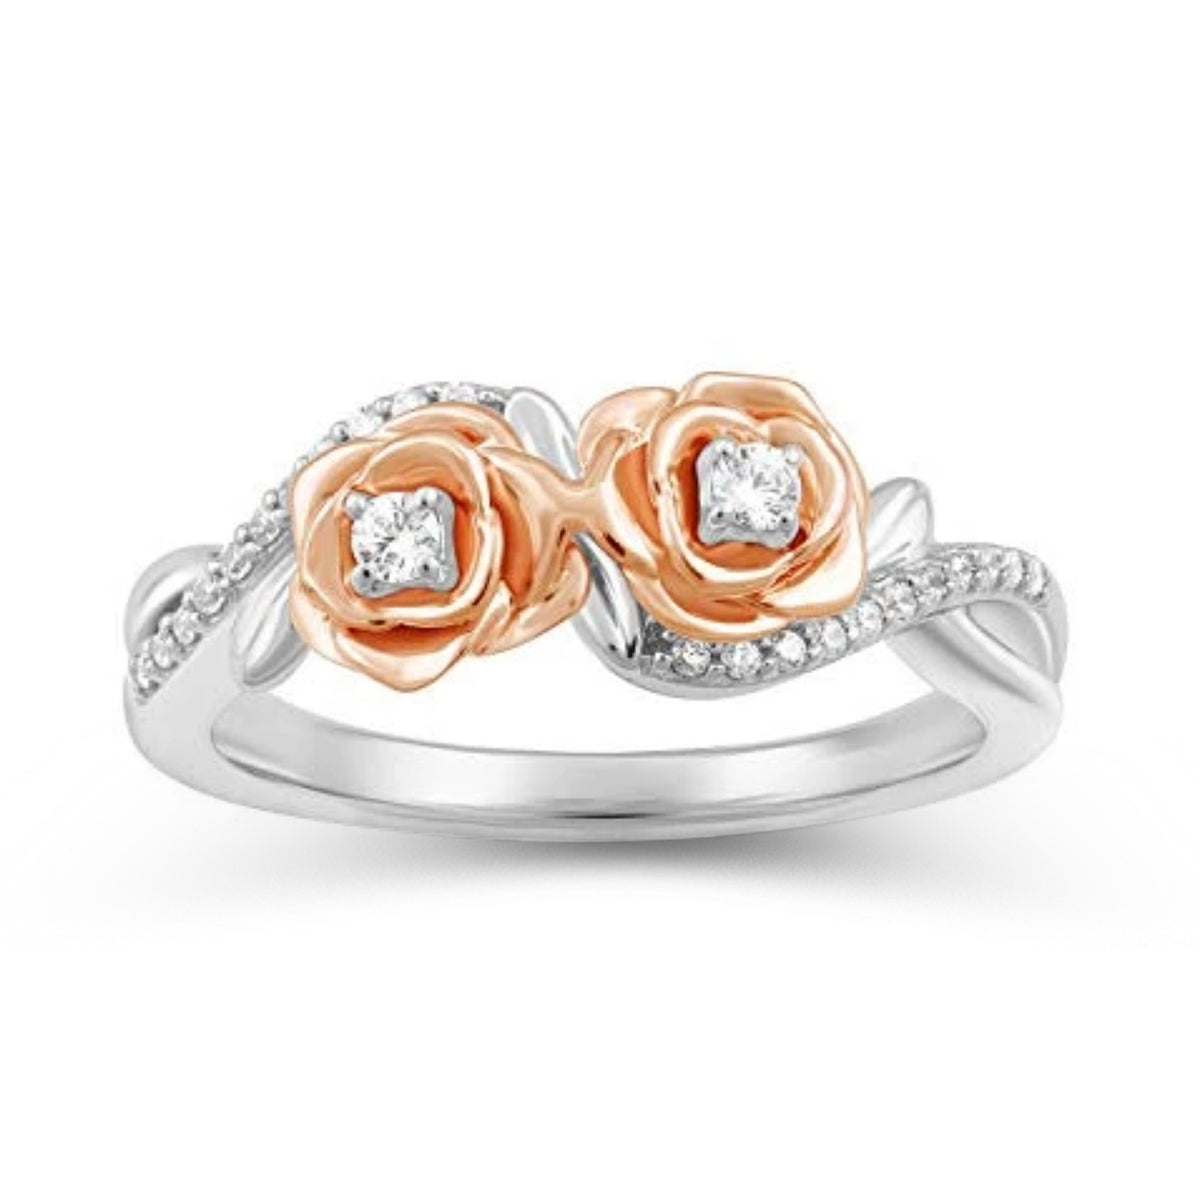 Disney Belle Inspired Rose Fashion Diamond Ring 1/6 CTTW